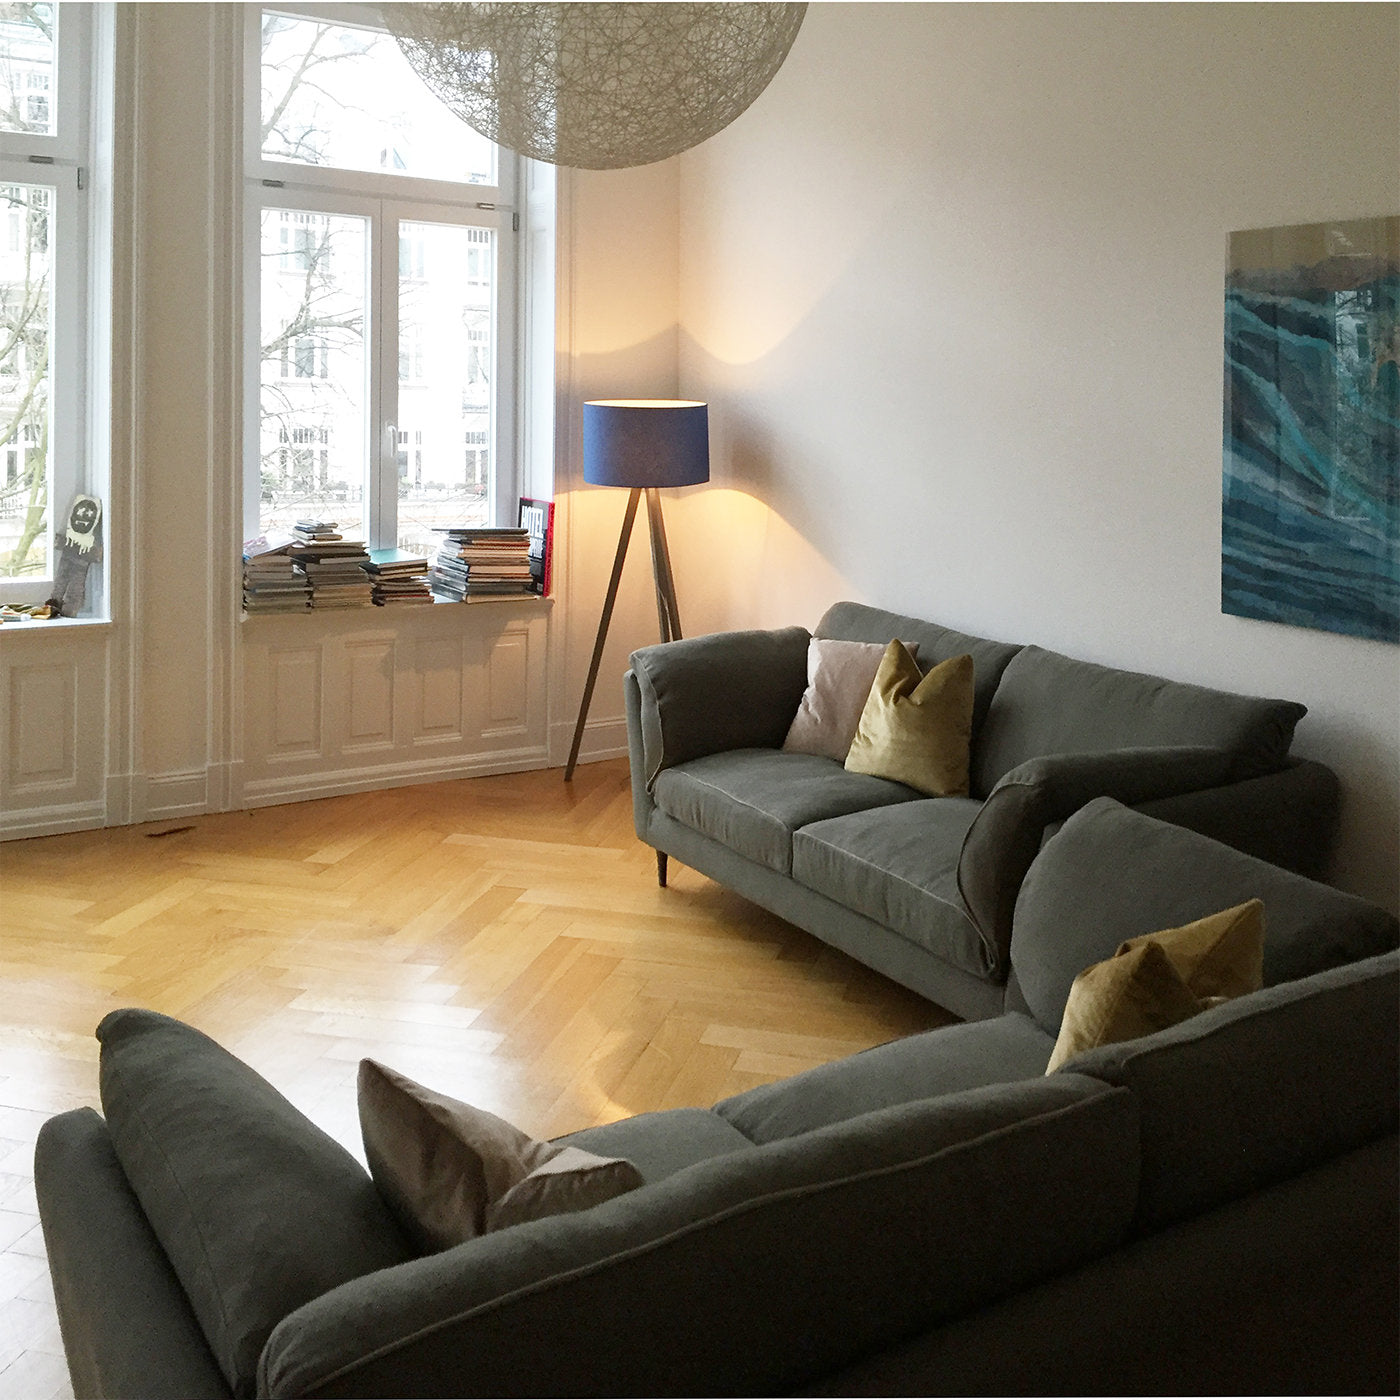 Casquet Ecological Beige Sofa by DDP Studio  - Alternative view 3